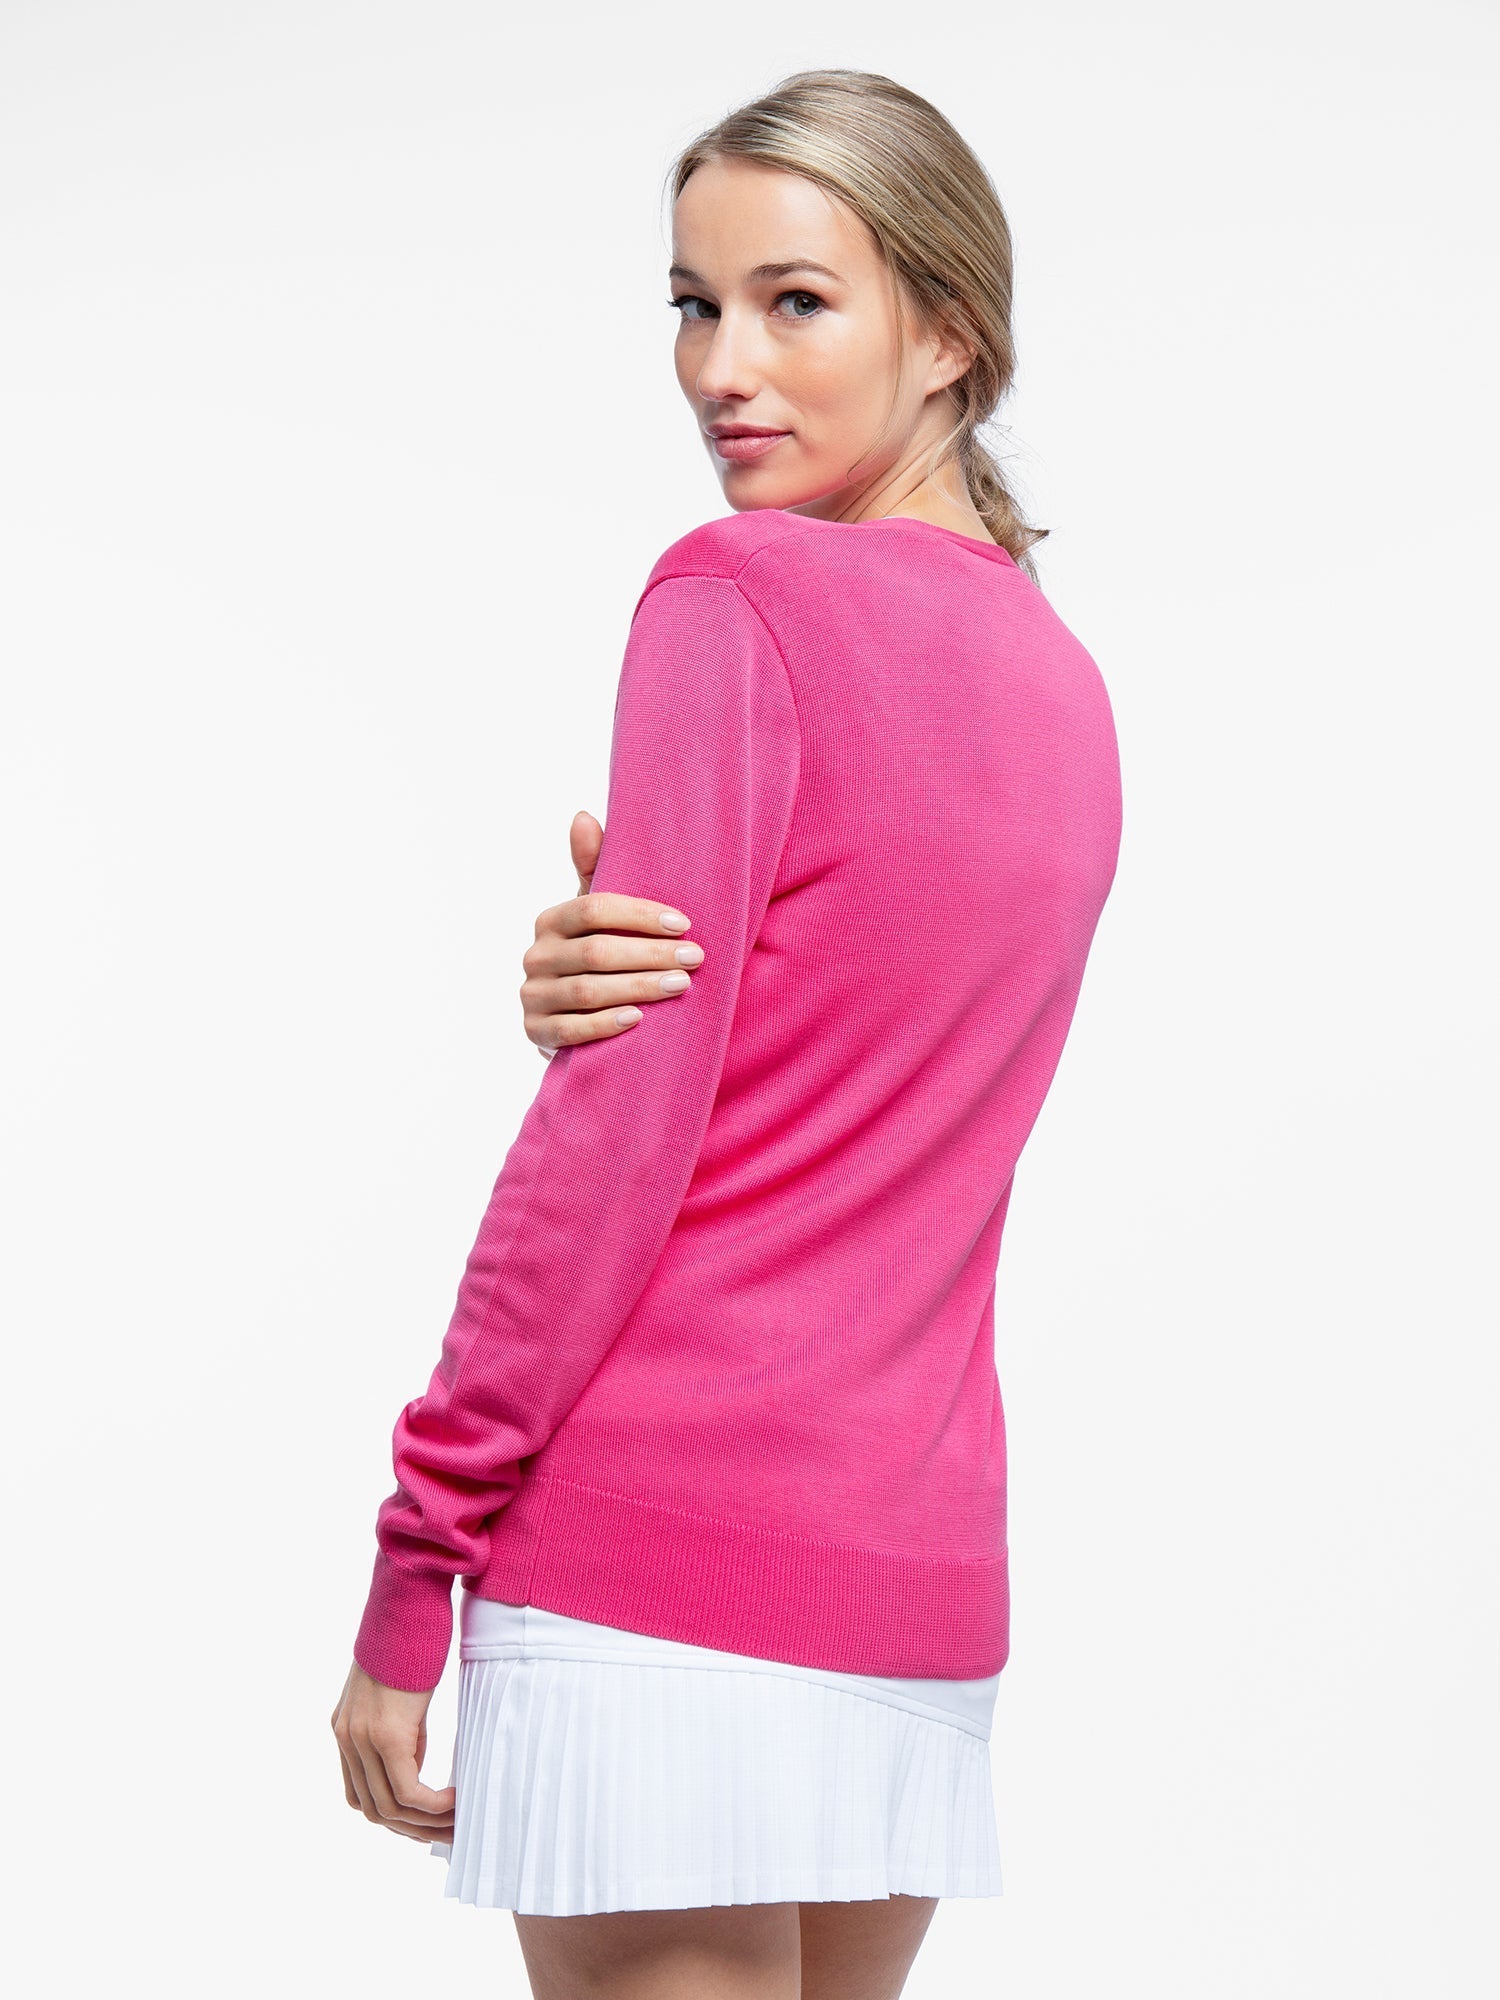 Classic V Neck Cardigan Sweater - Pink Rose